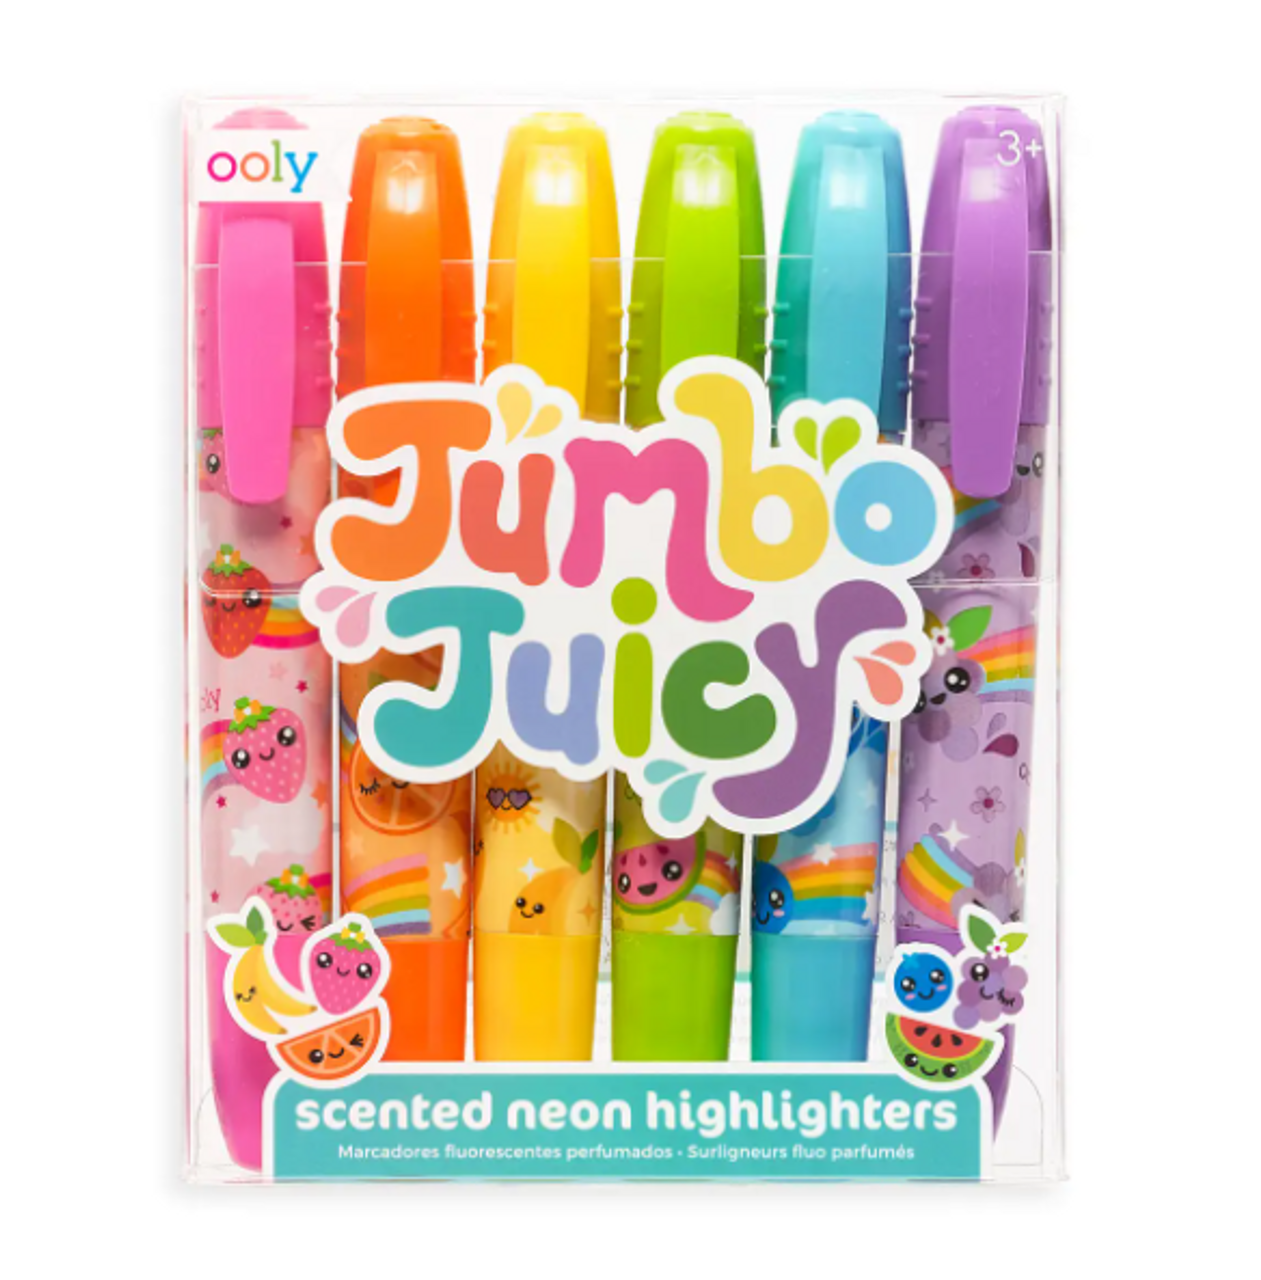 Jumbo Juicy Scented Highlighters